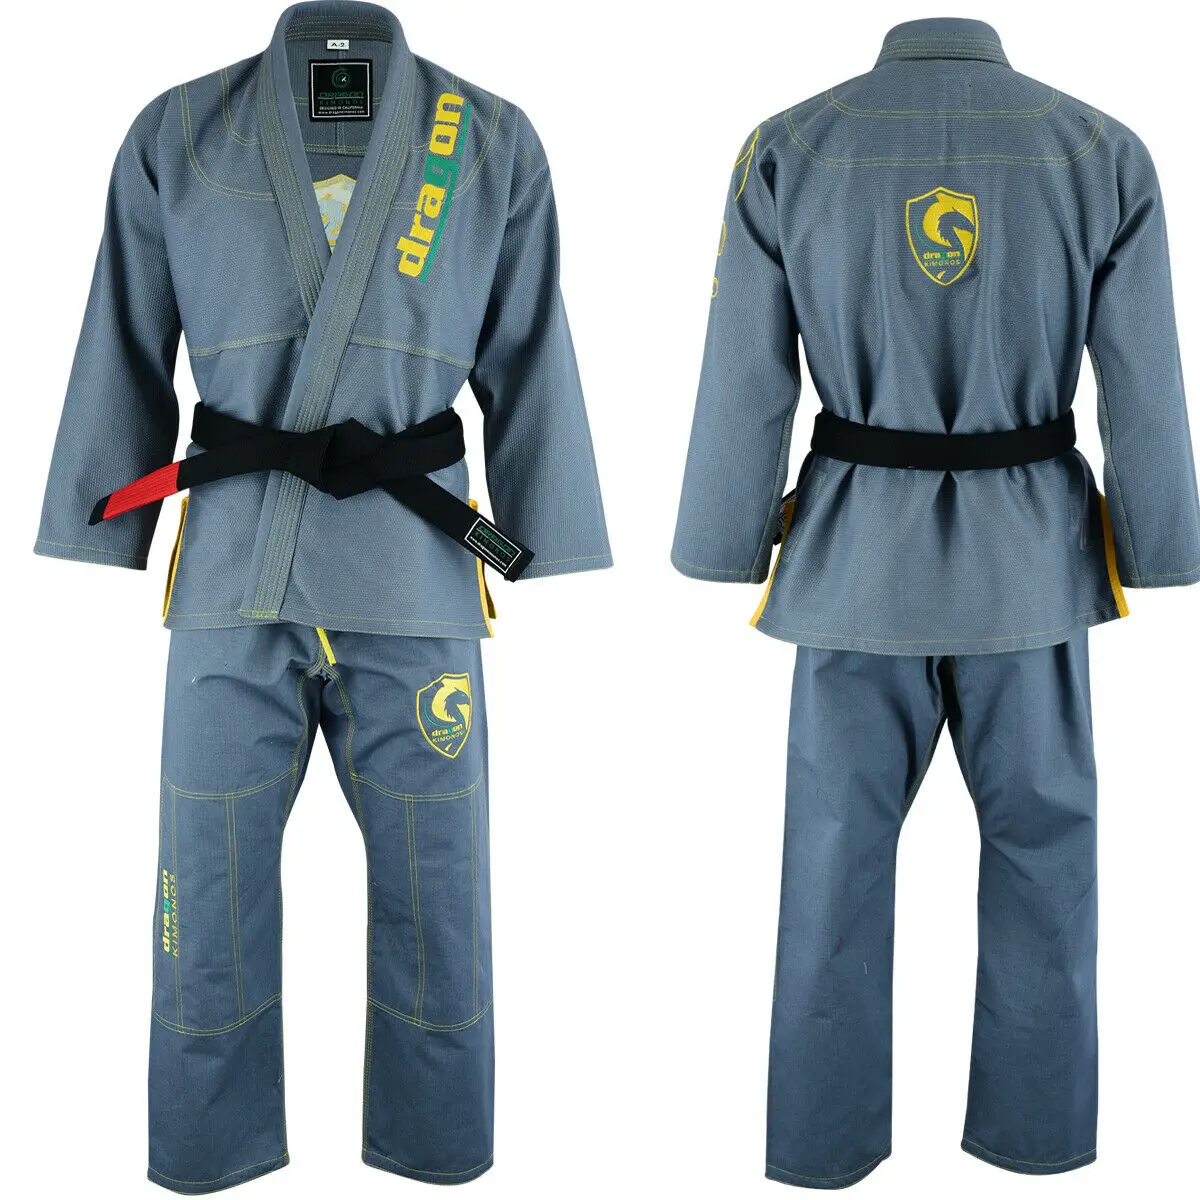 Details about   GranD MMA Grappling Jiu Jitsu Gi Brazilian BJJ Kimono Uniform Martial Arts Gi 